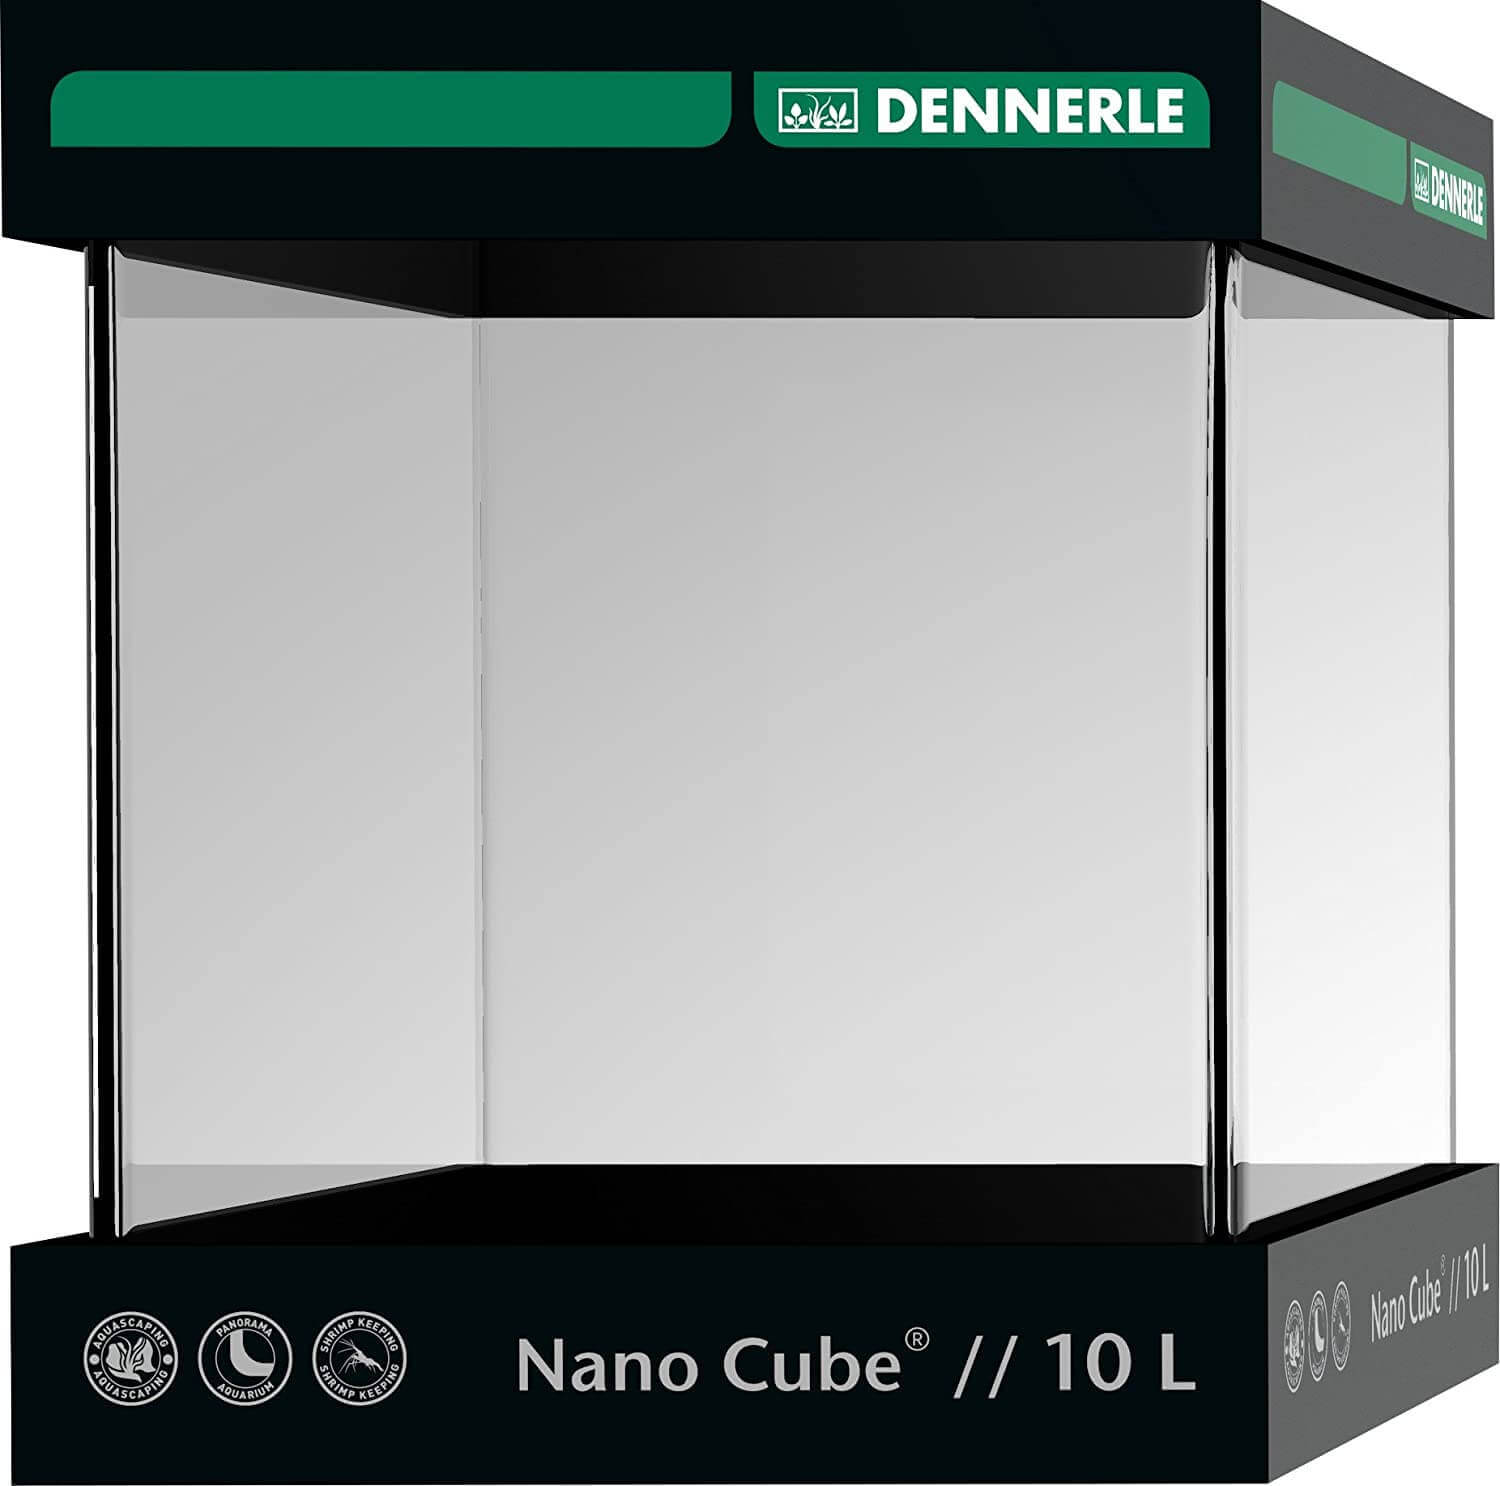 Dennerle Shrimp Cube 2.5g Tank only